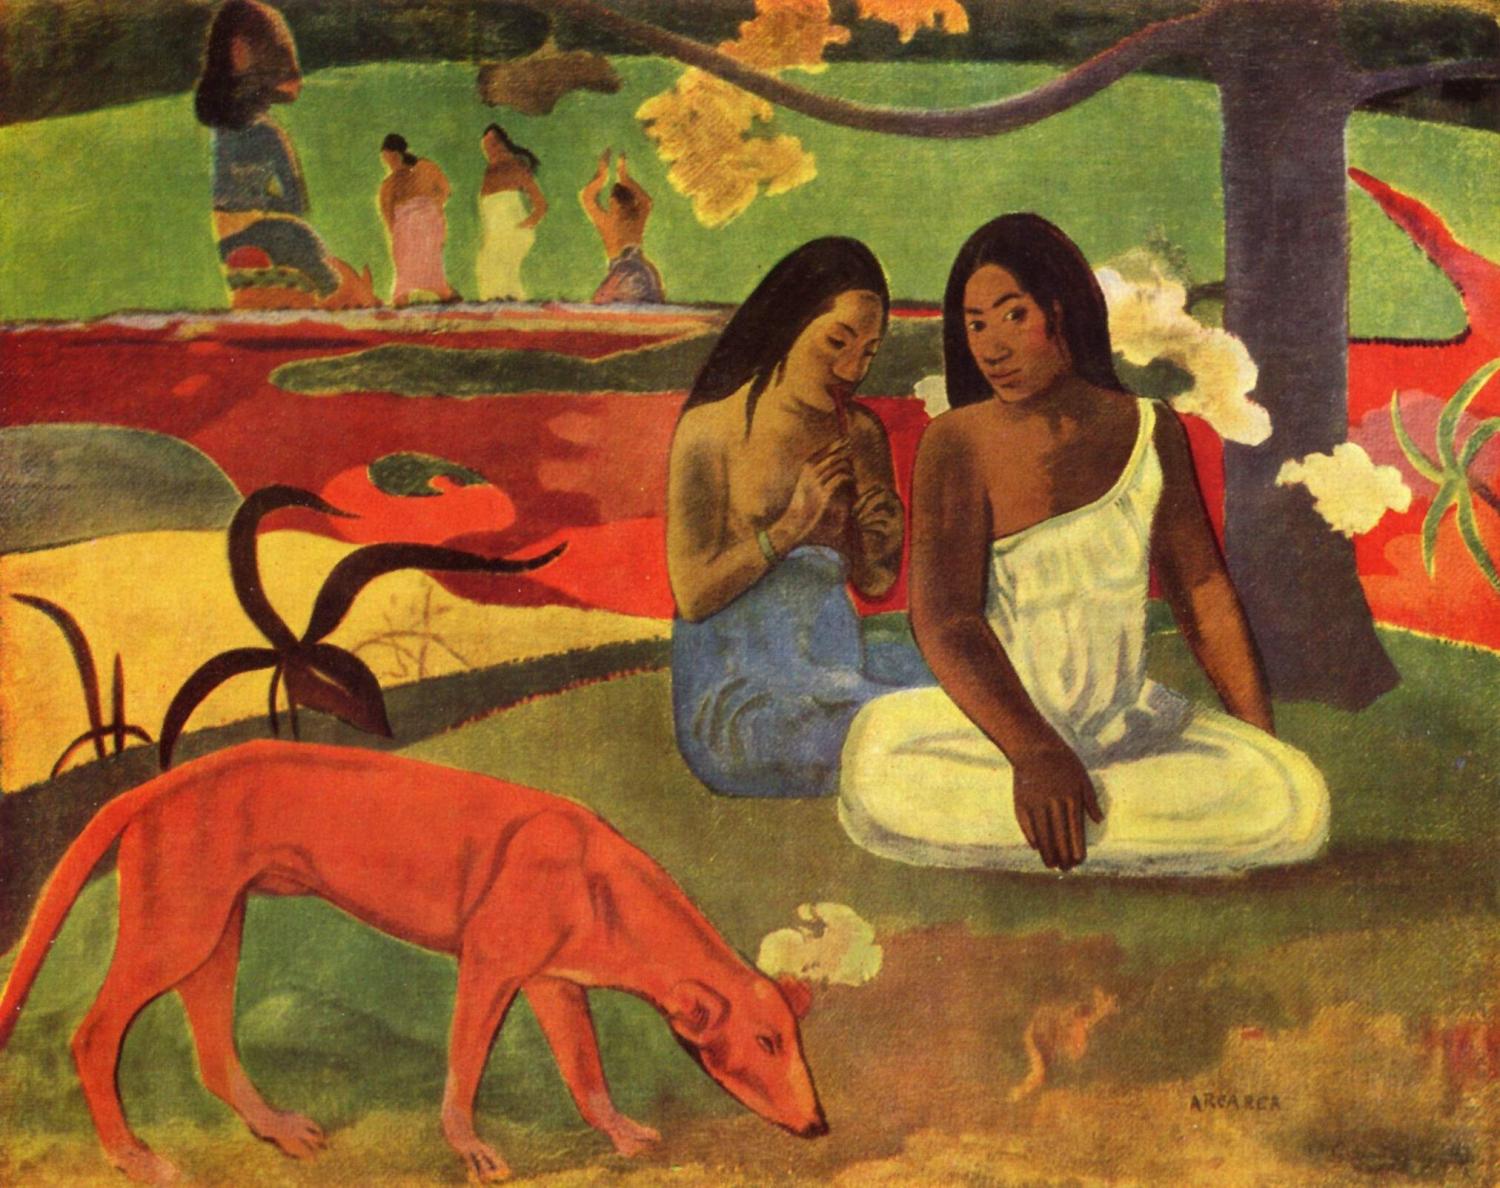 Gauguin’s “Joyeusetés” (merrymaking). My wife didn’t dig the dog